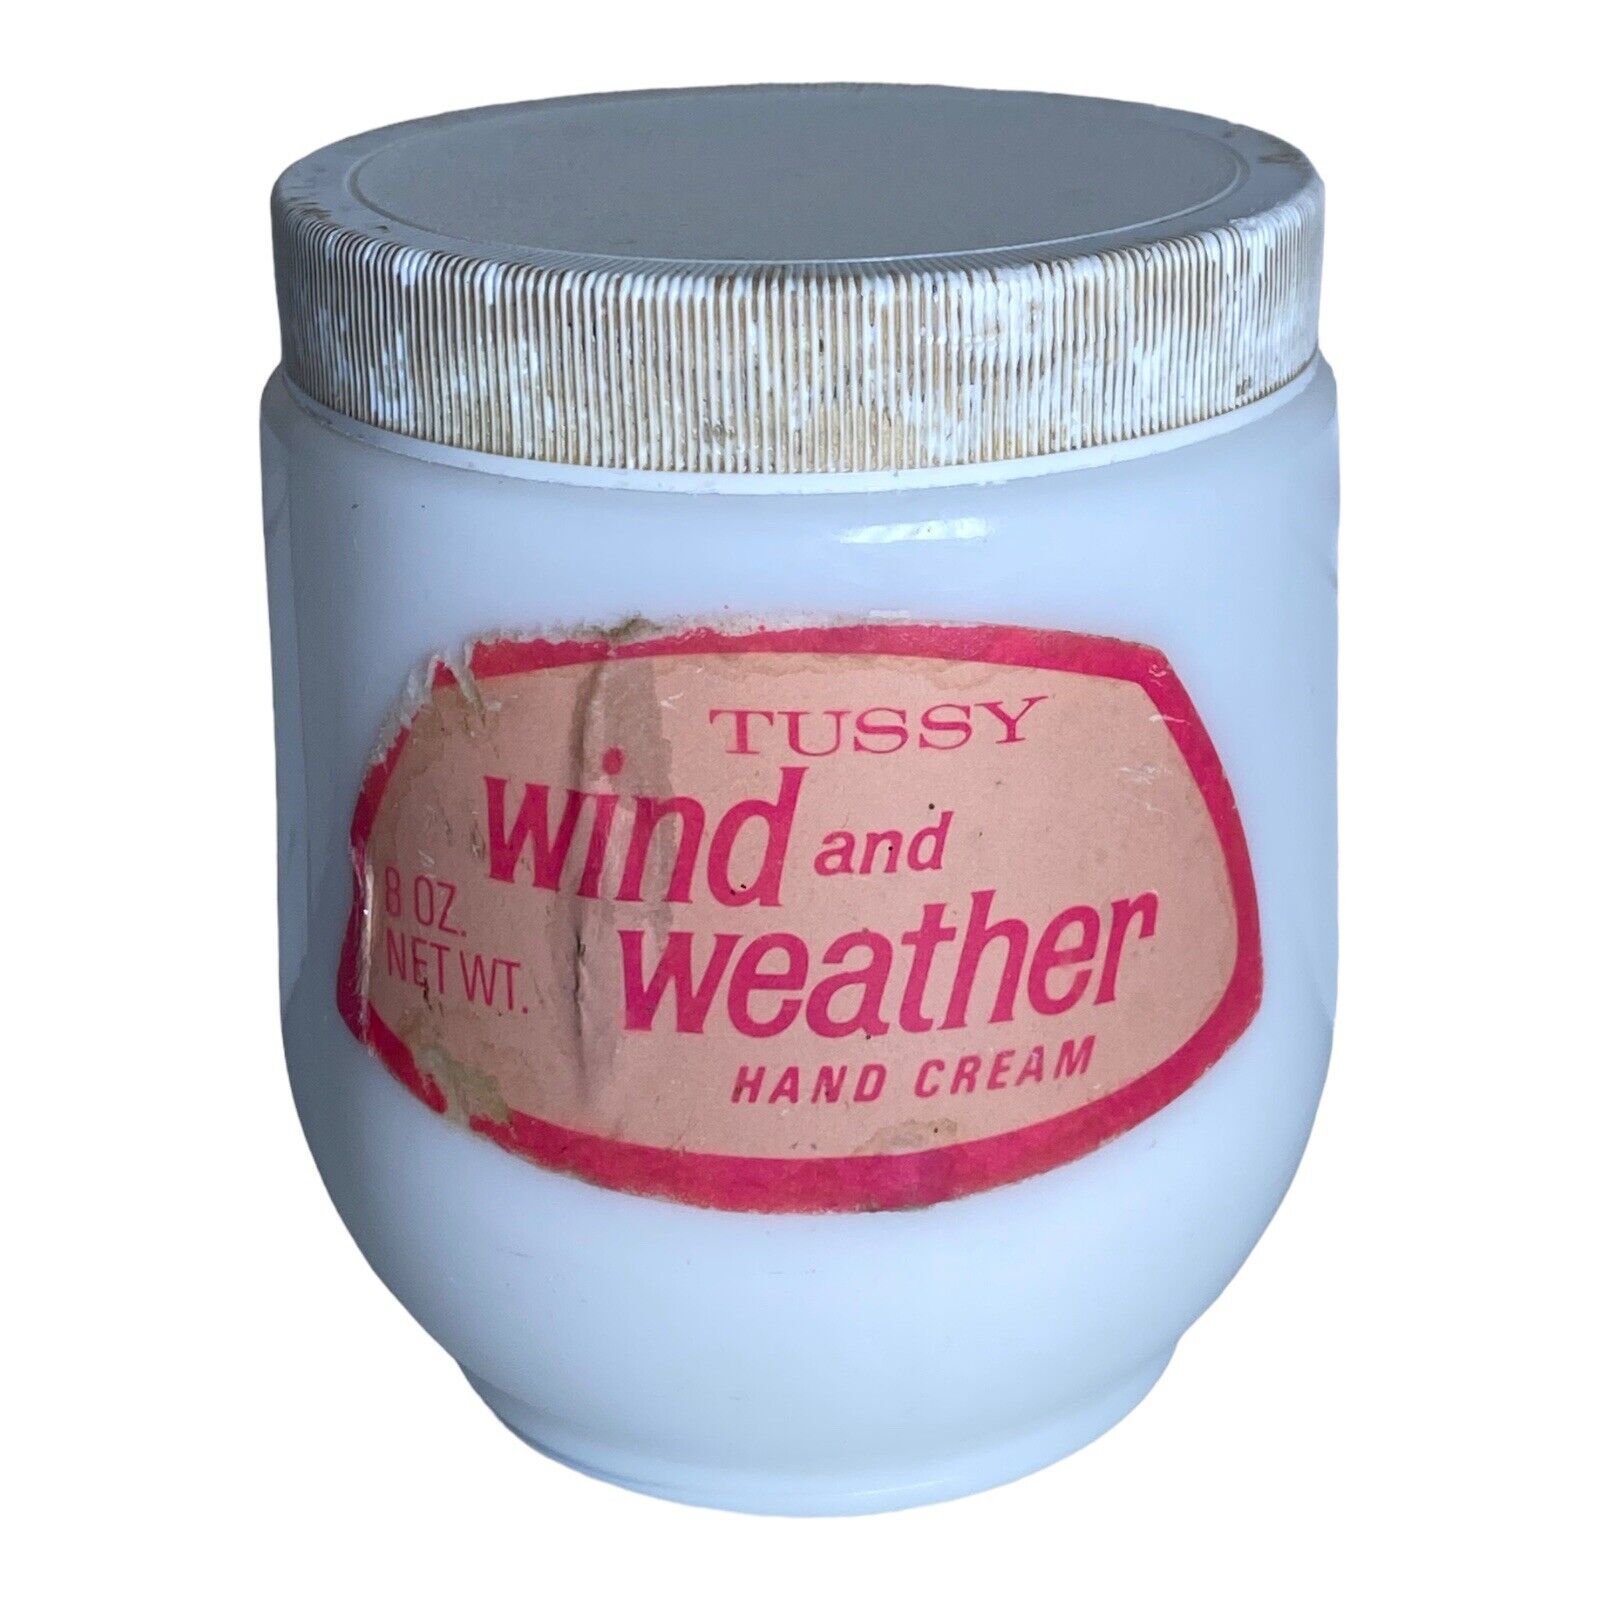 VTG RARE 1960s Cosmetics TUSSY Wind & Weather Hand Cream Milk Glass Jar Prop 8oz